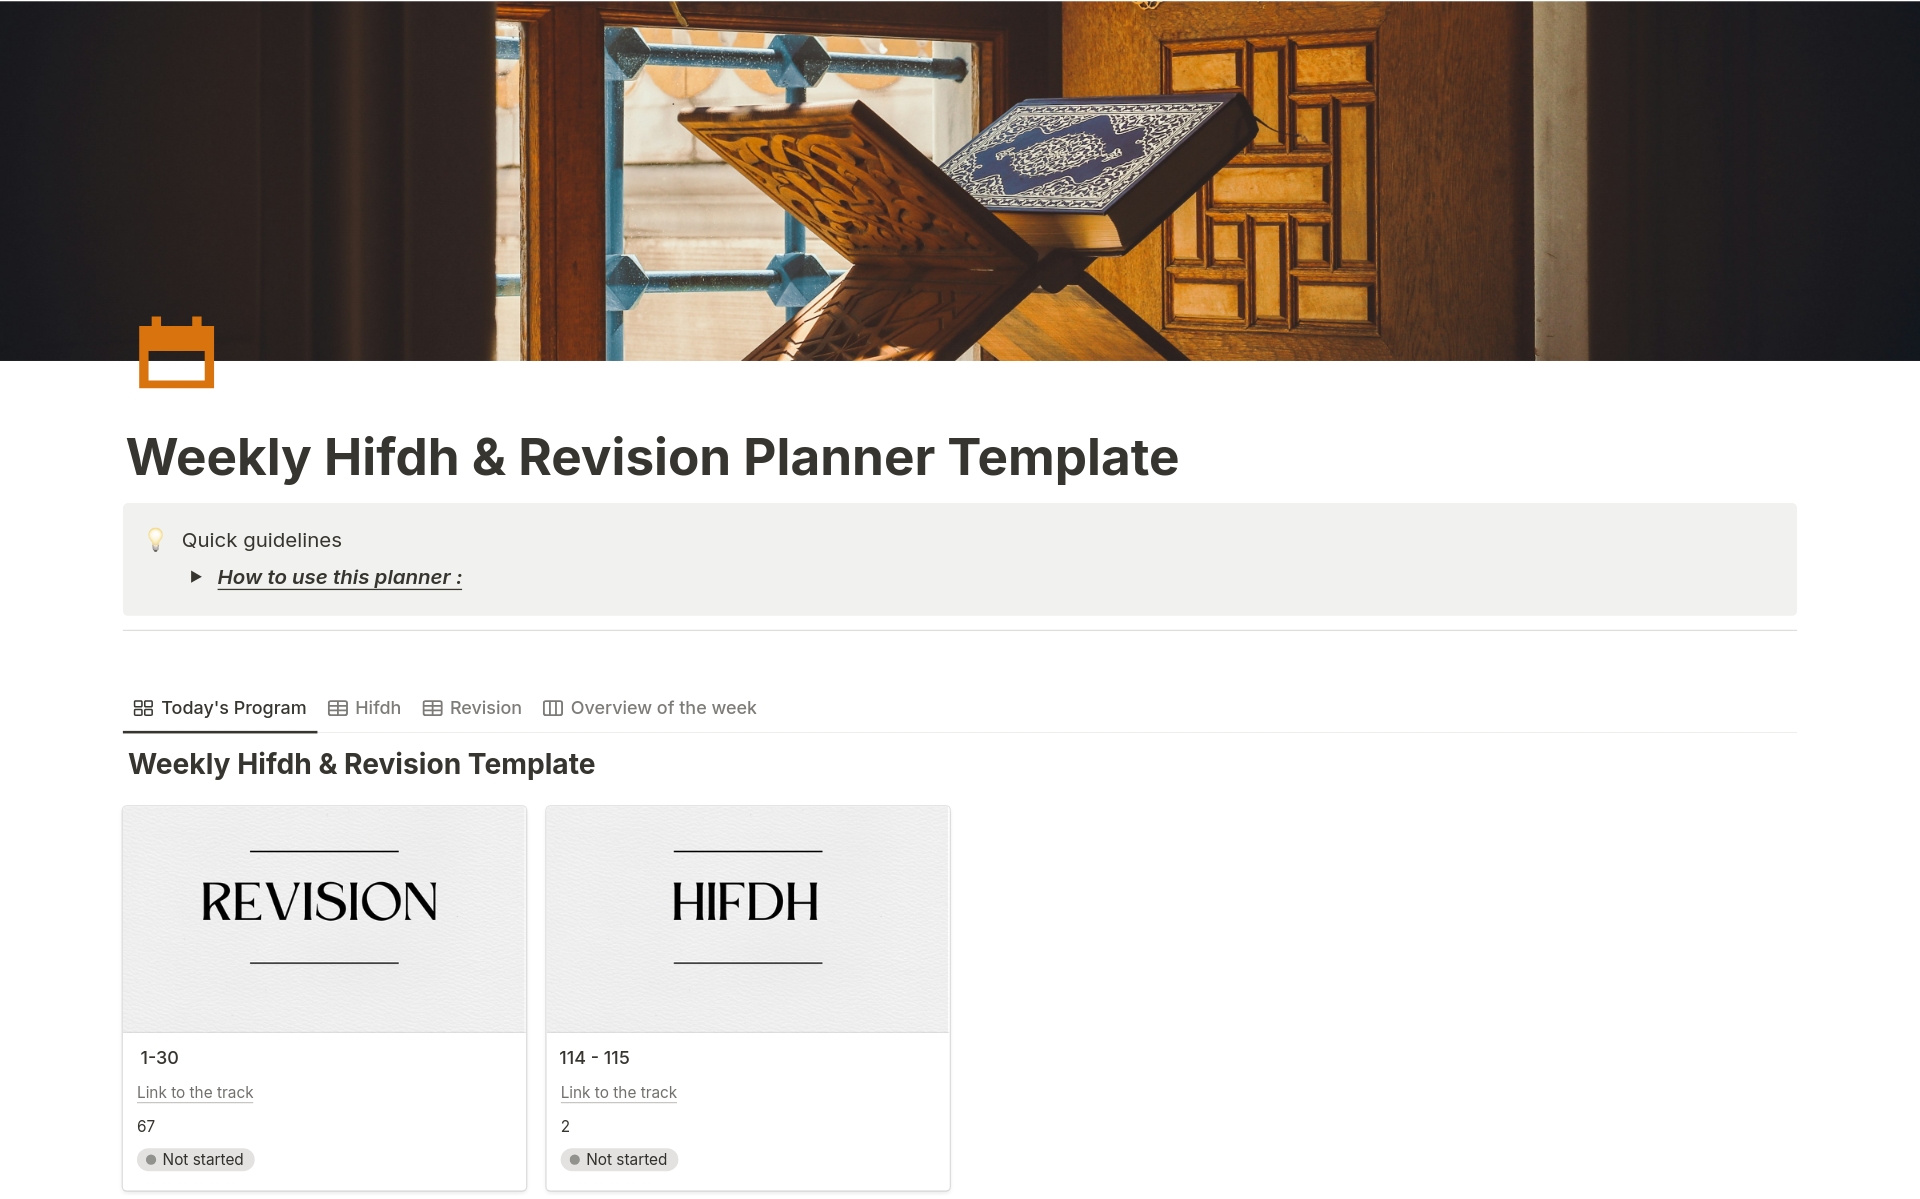 Weekly Hifdh & Revision Planner님의 템플릿 미리보기